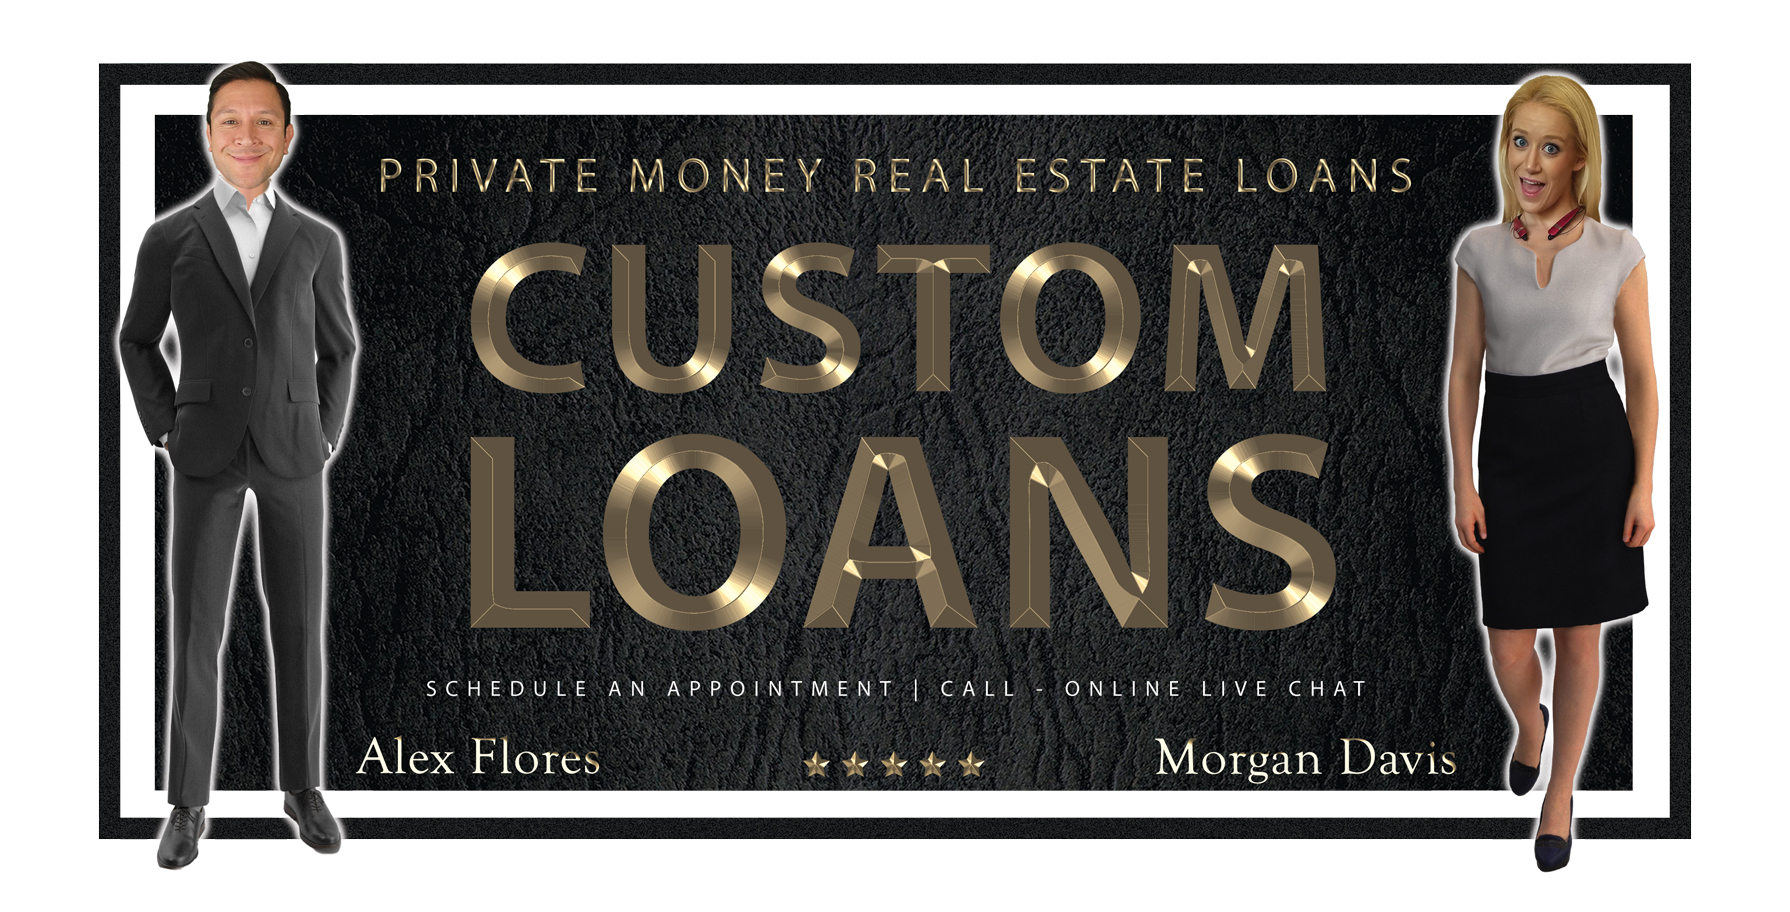 Custom-Loans-by-Private-Money-Lender-Lux-Loans-in-Houston-Texas